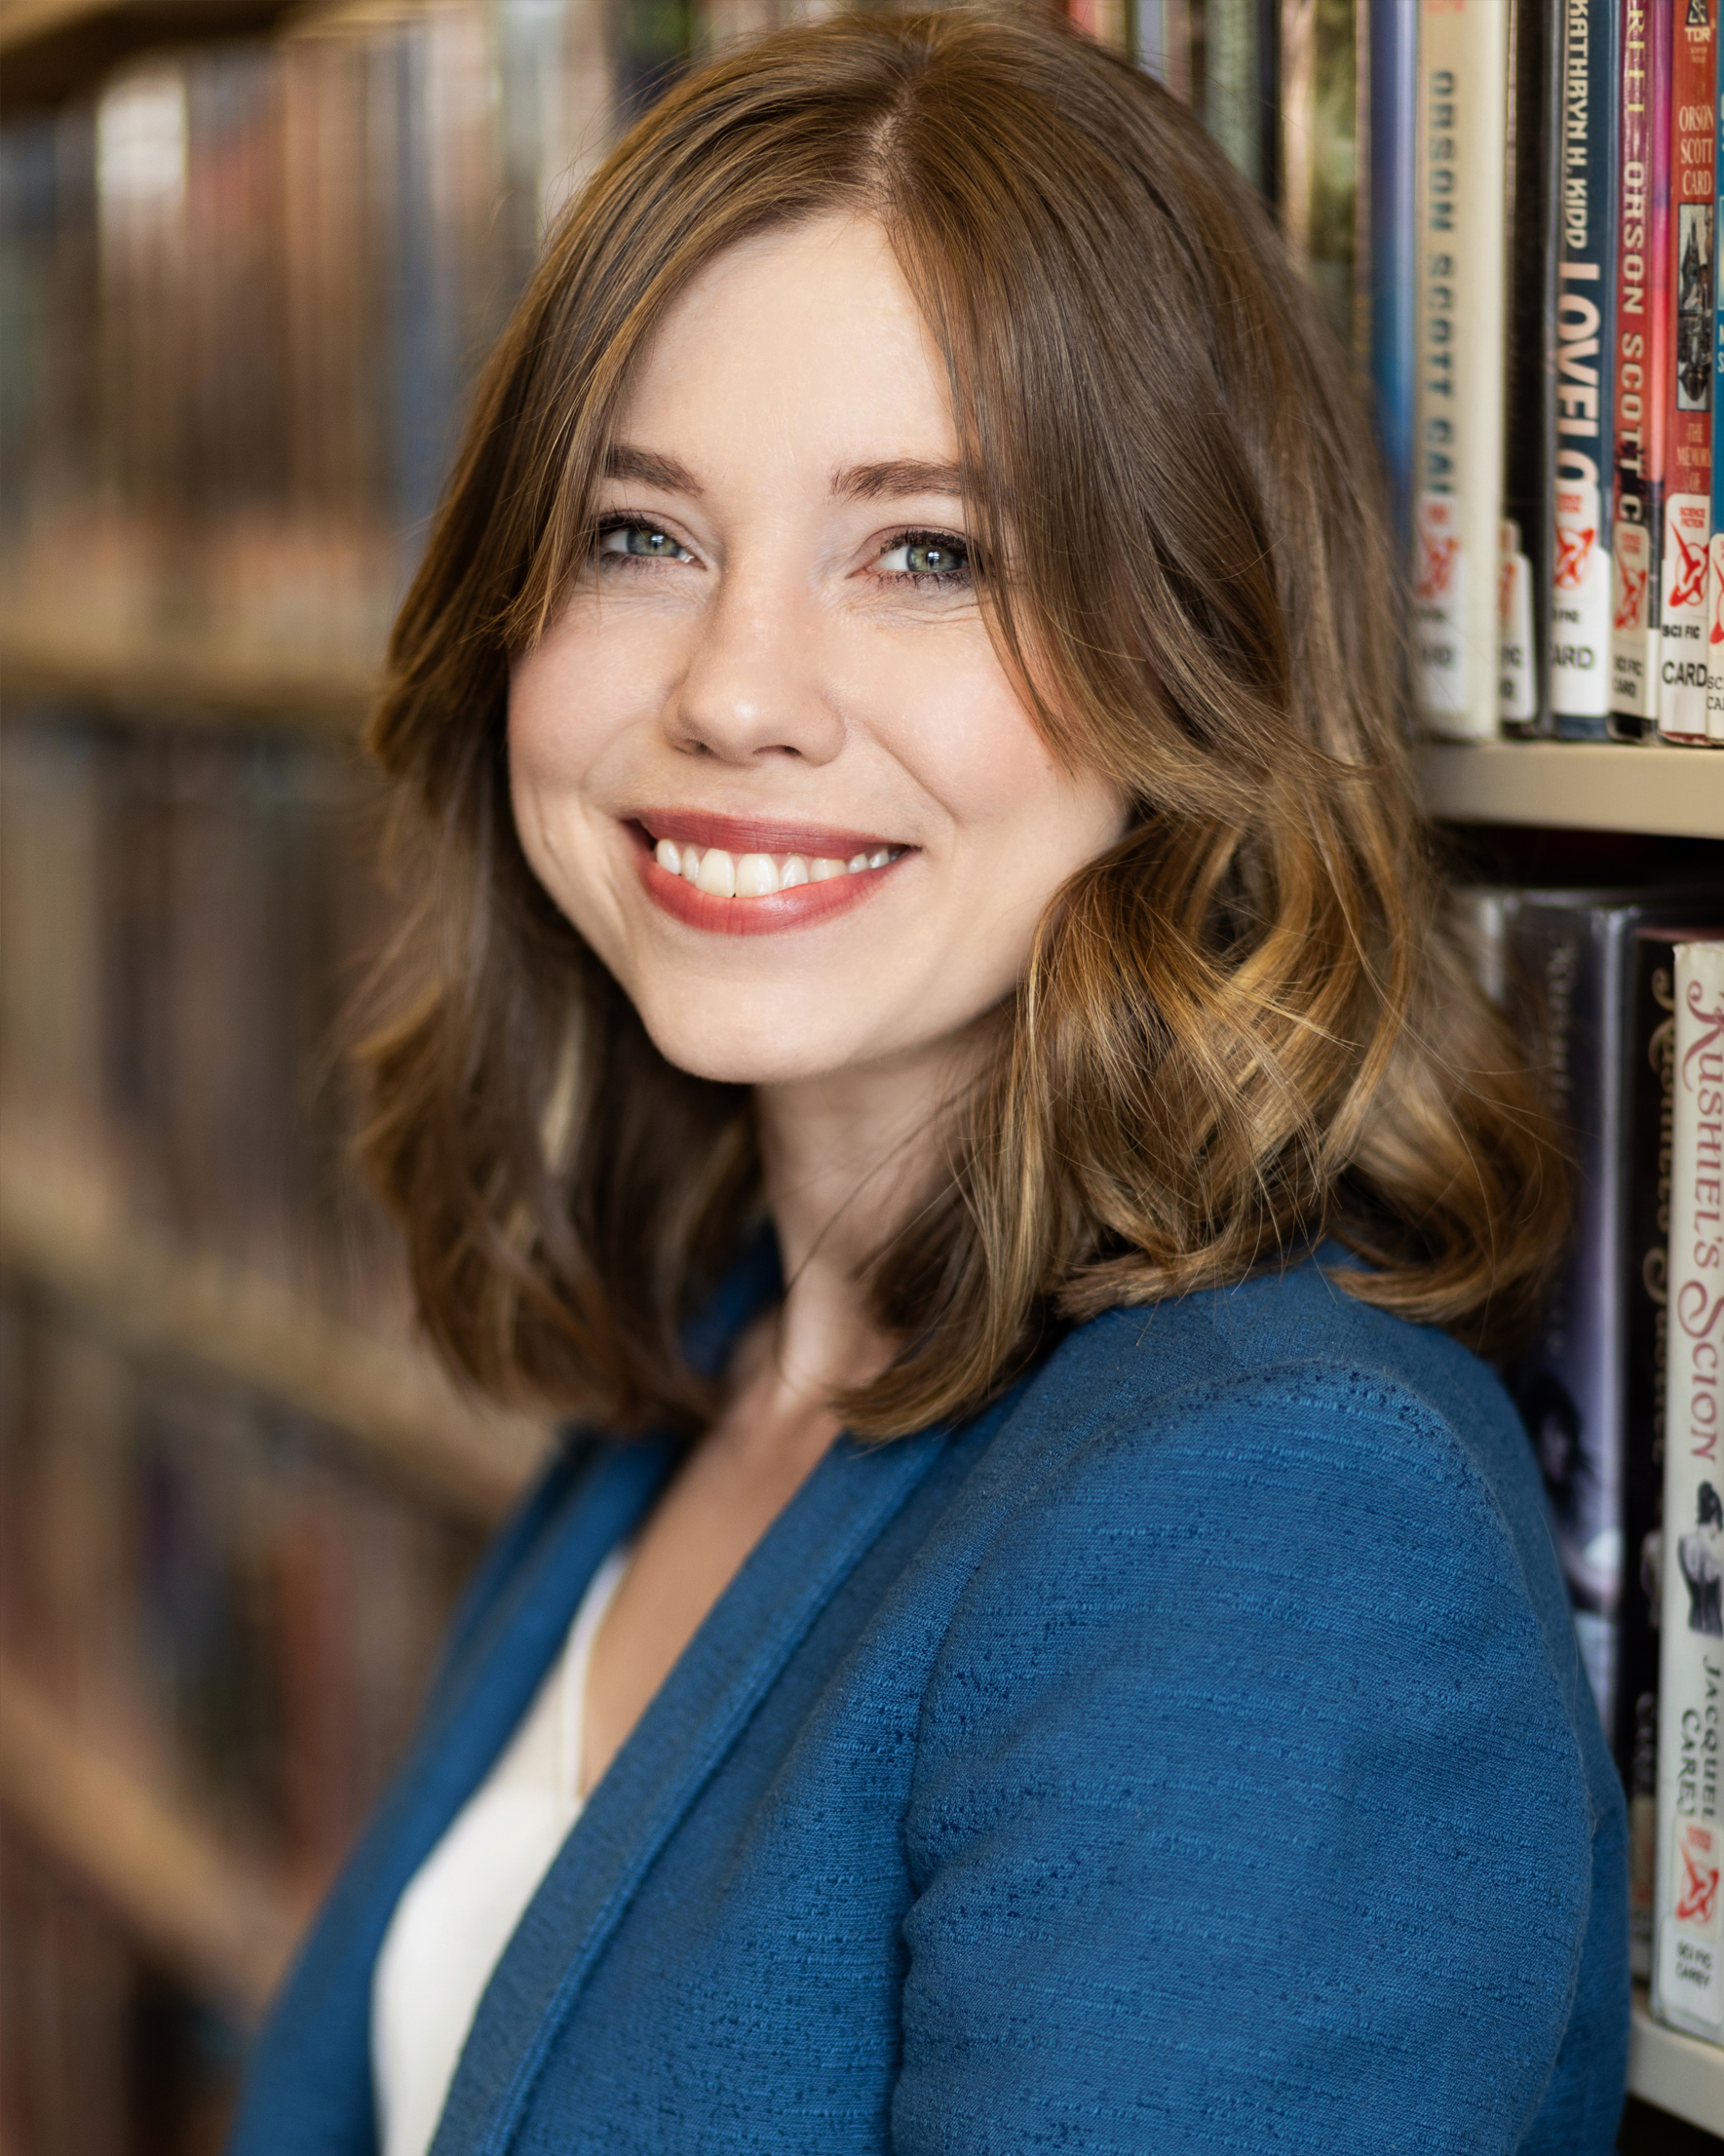 smiling woman leans against a book shelf